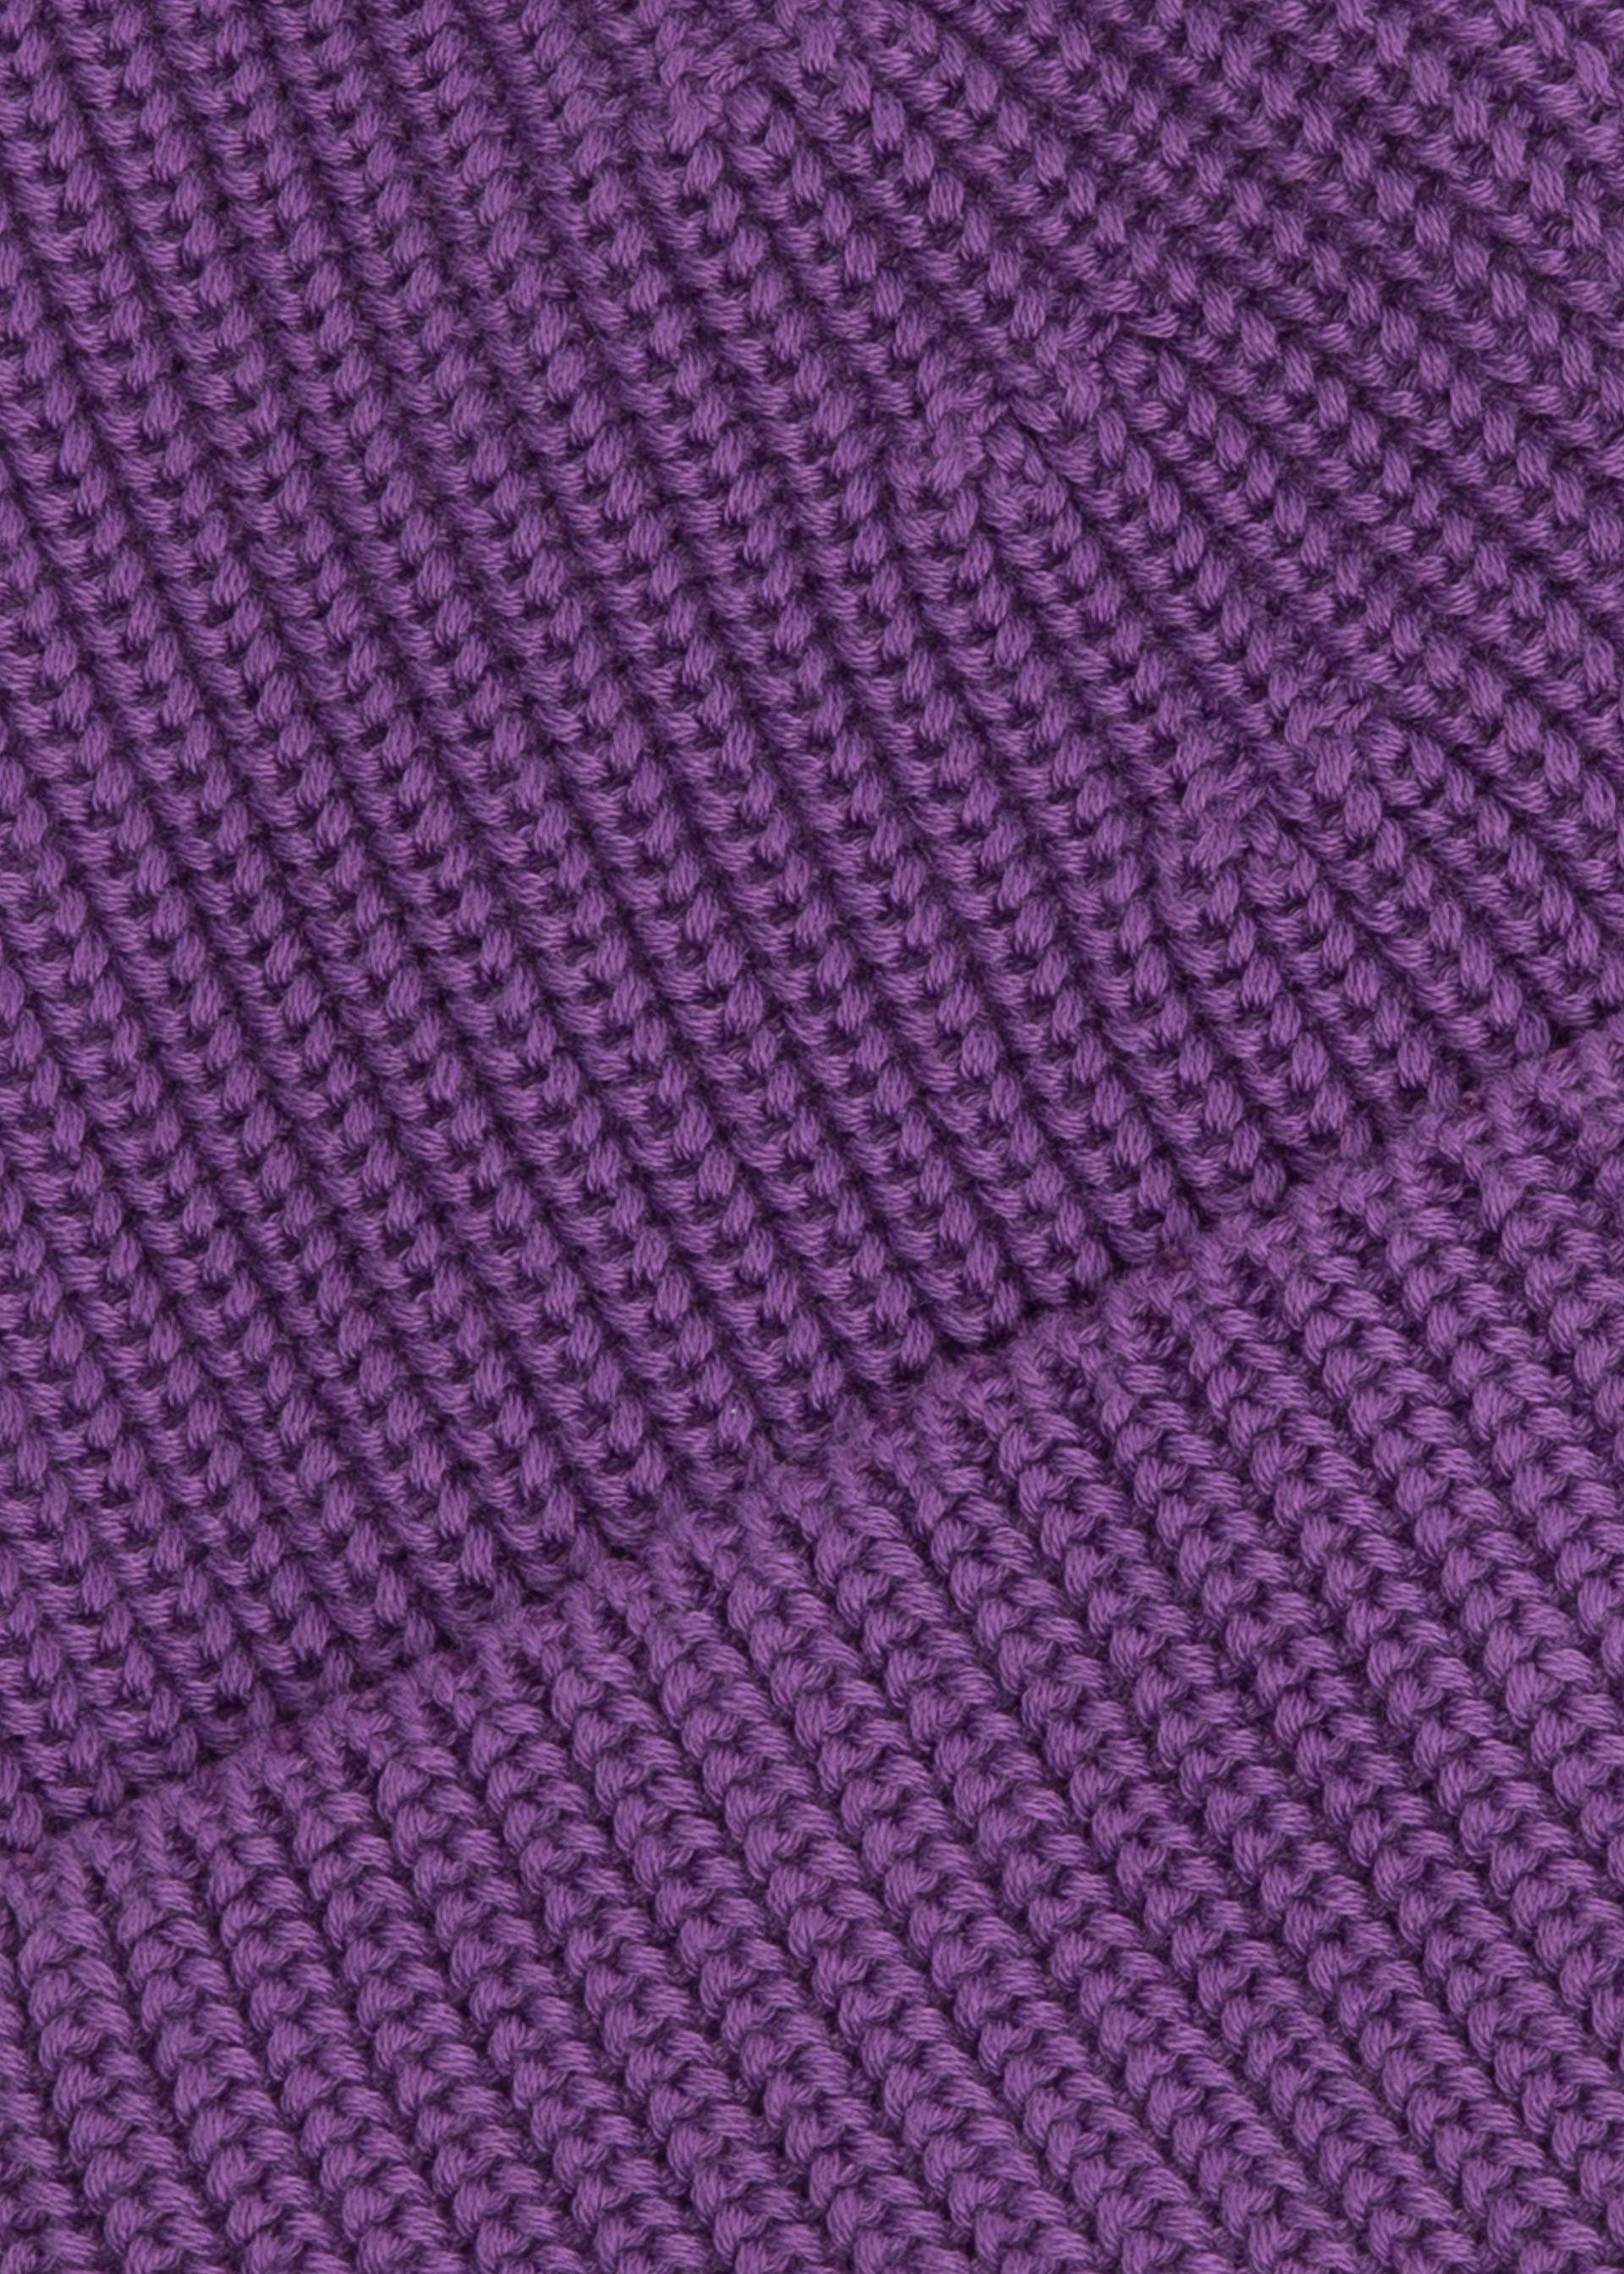 Strickmütze Beanie Queen, purple ellipse knit, Accessoires, Lila